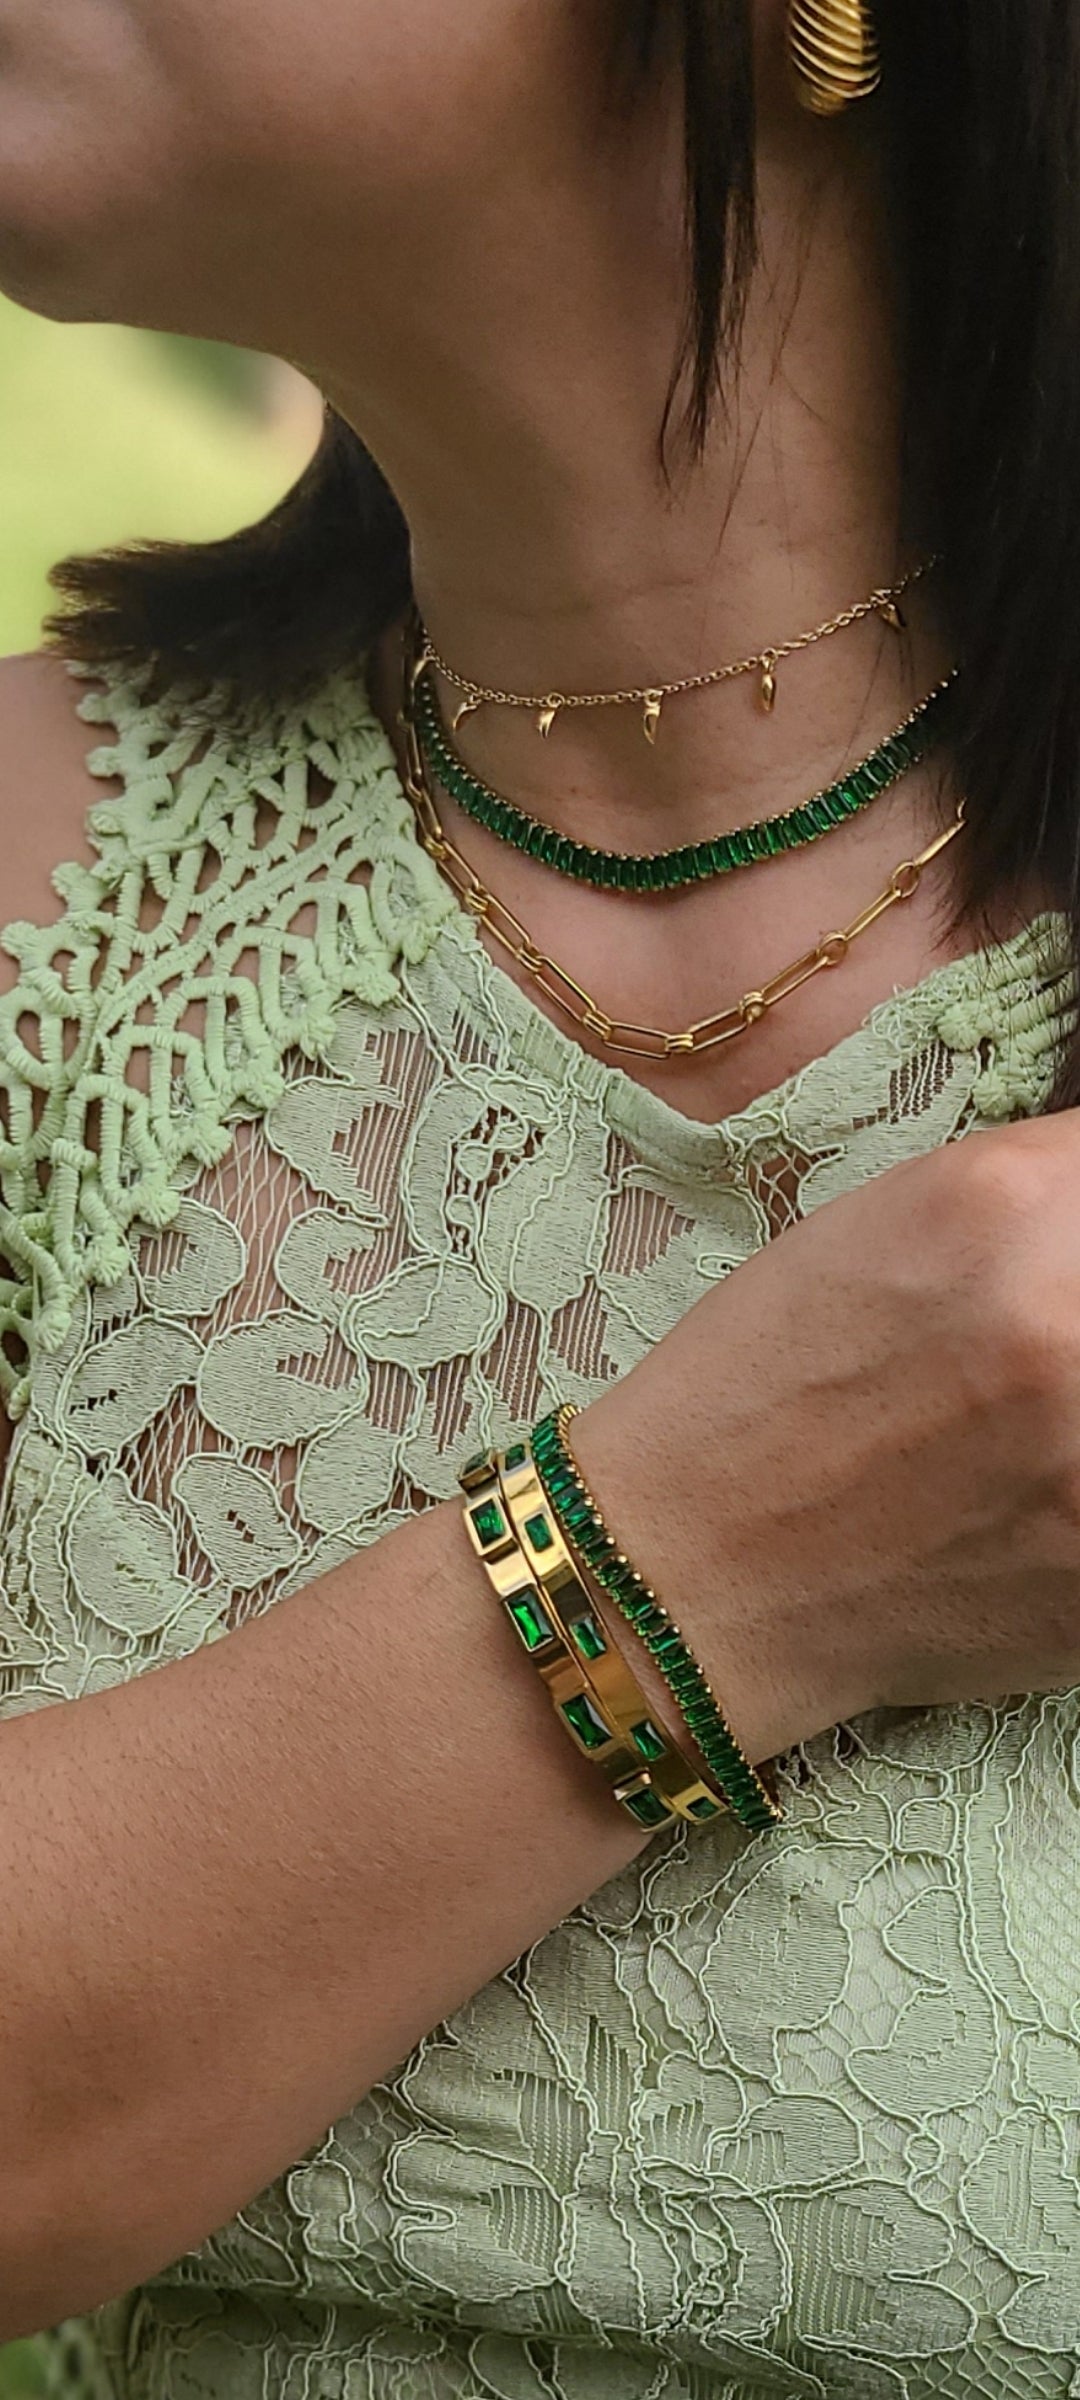 Alegria Emerald Necklace